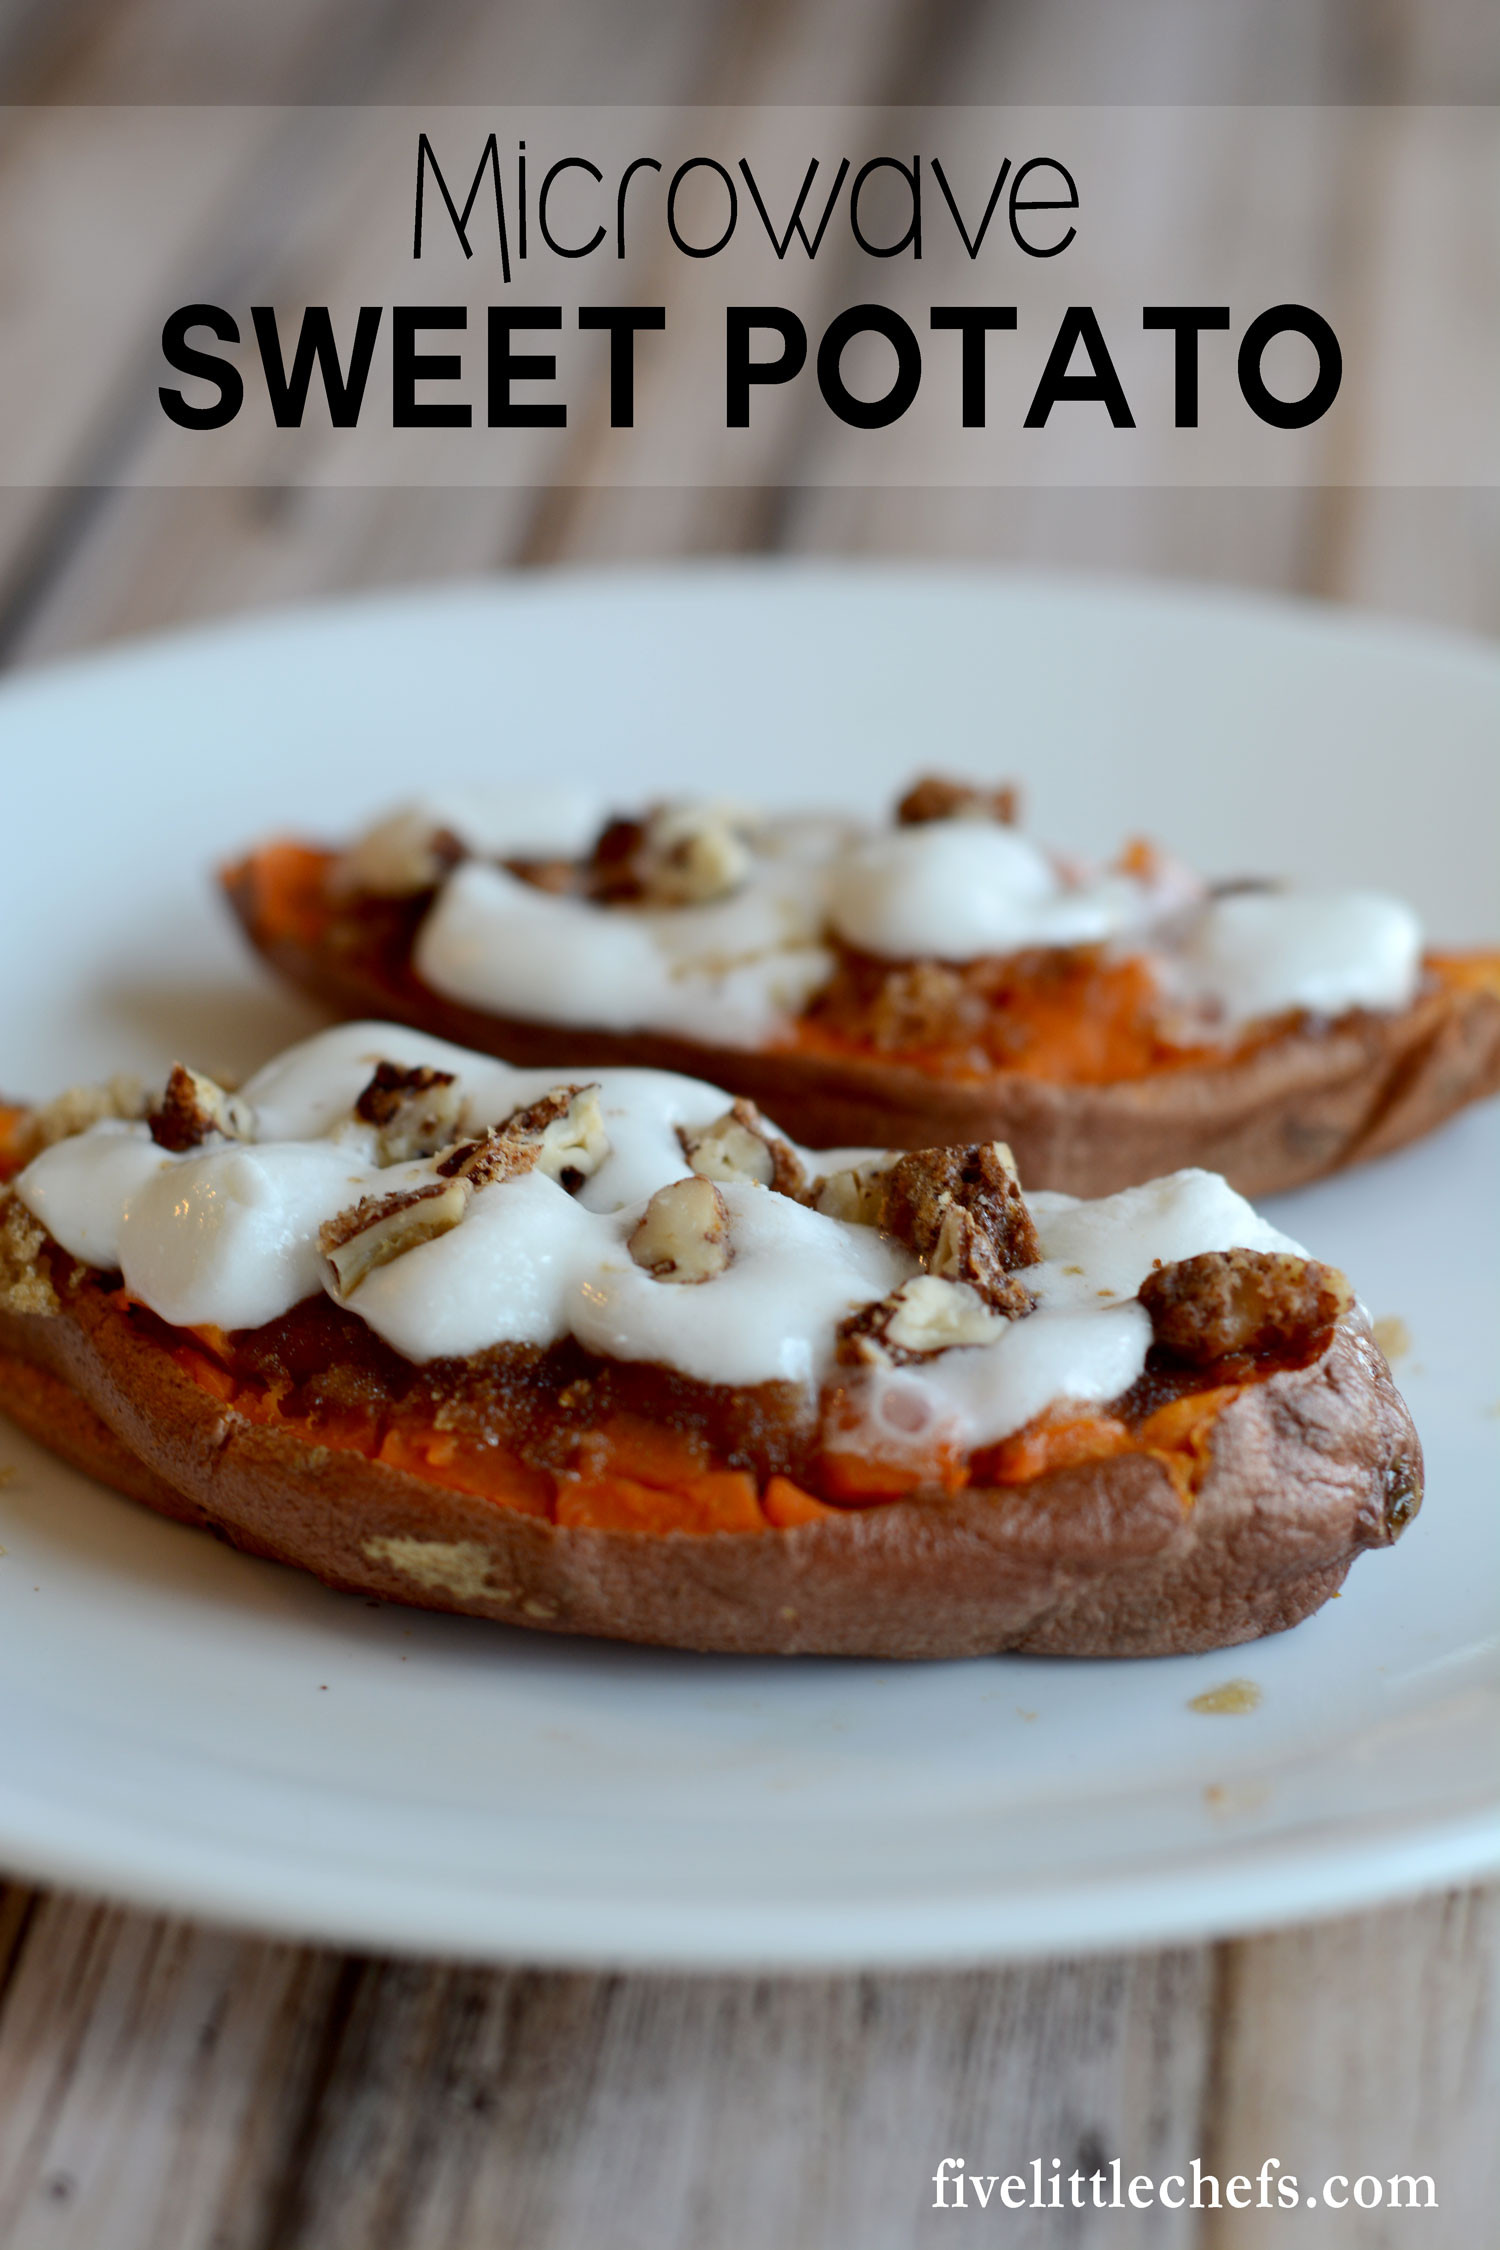 Cook Sweet Potato In Microwave
 Microwave Sweet Potato